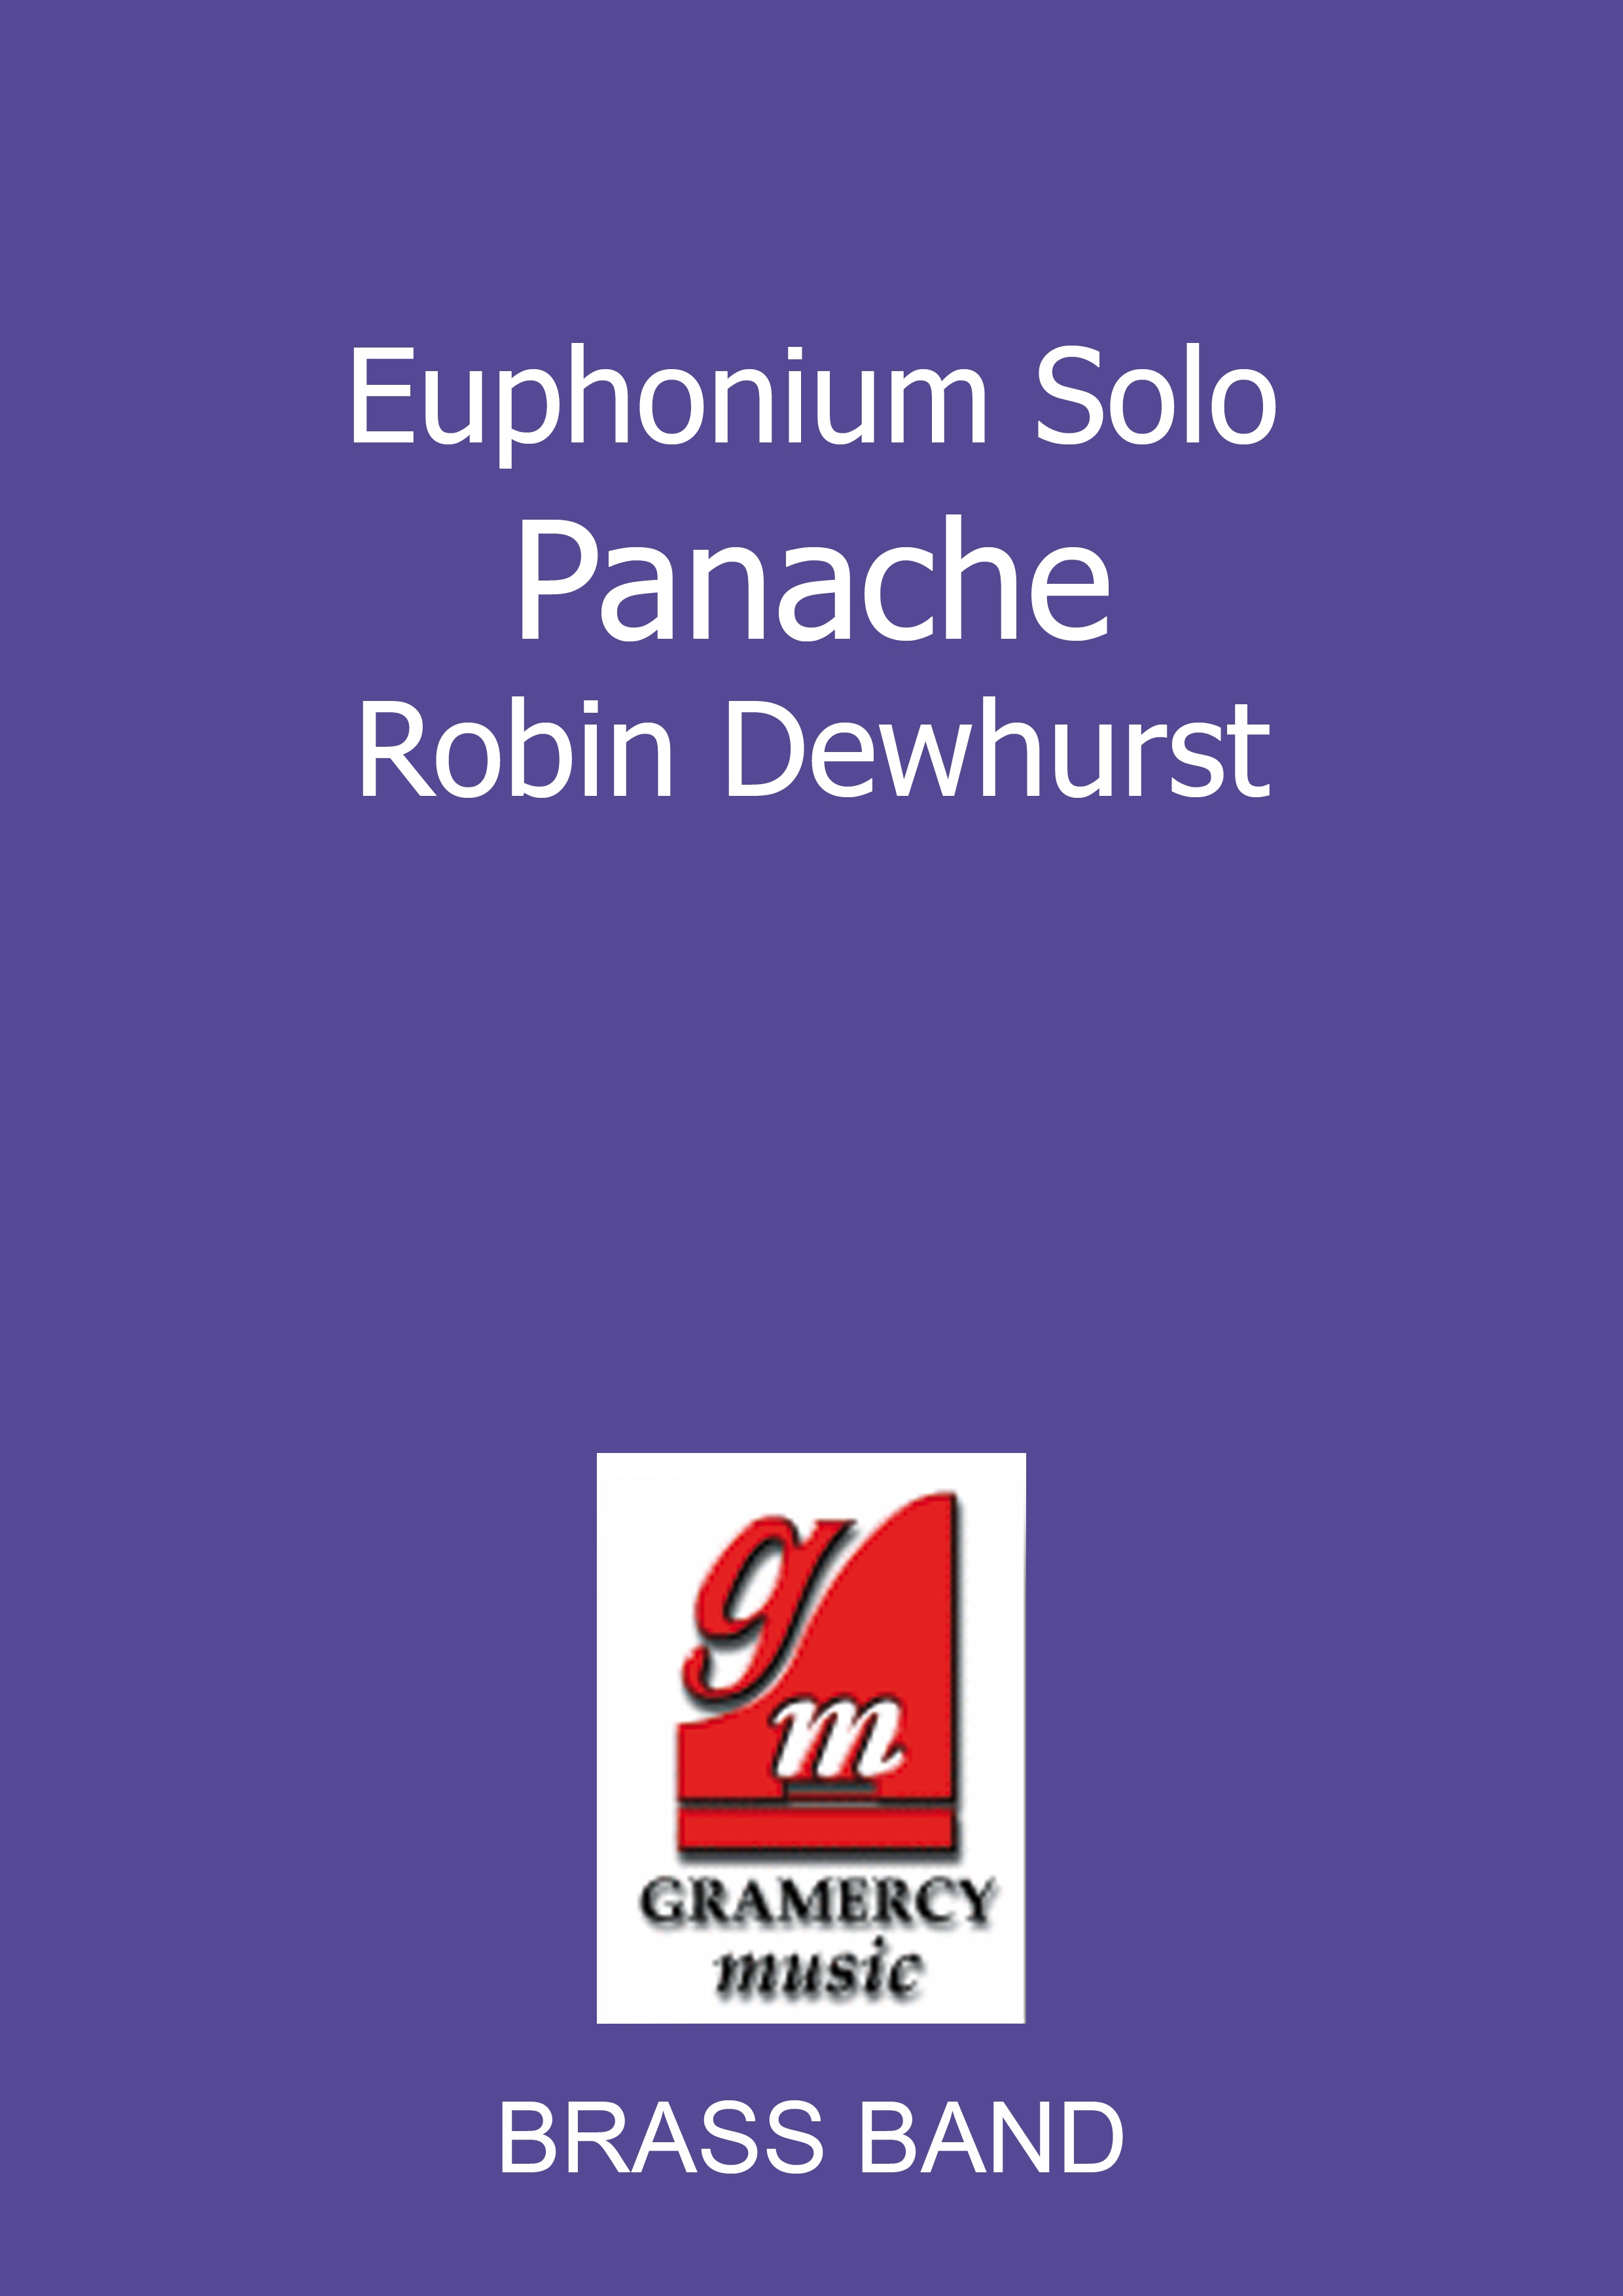 Panache (Euphonium Solo with Brass Band)